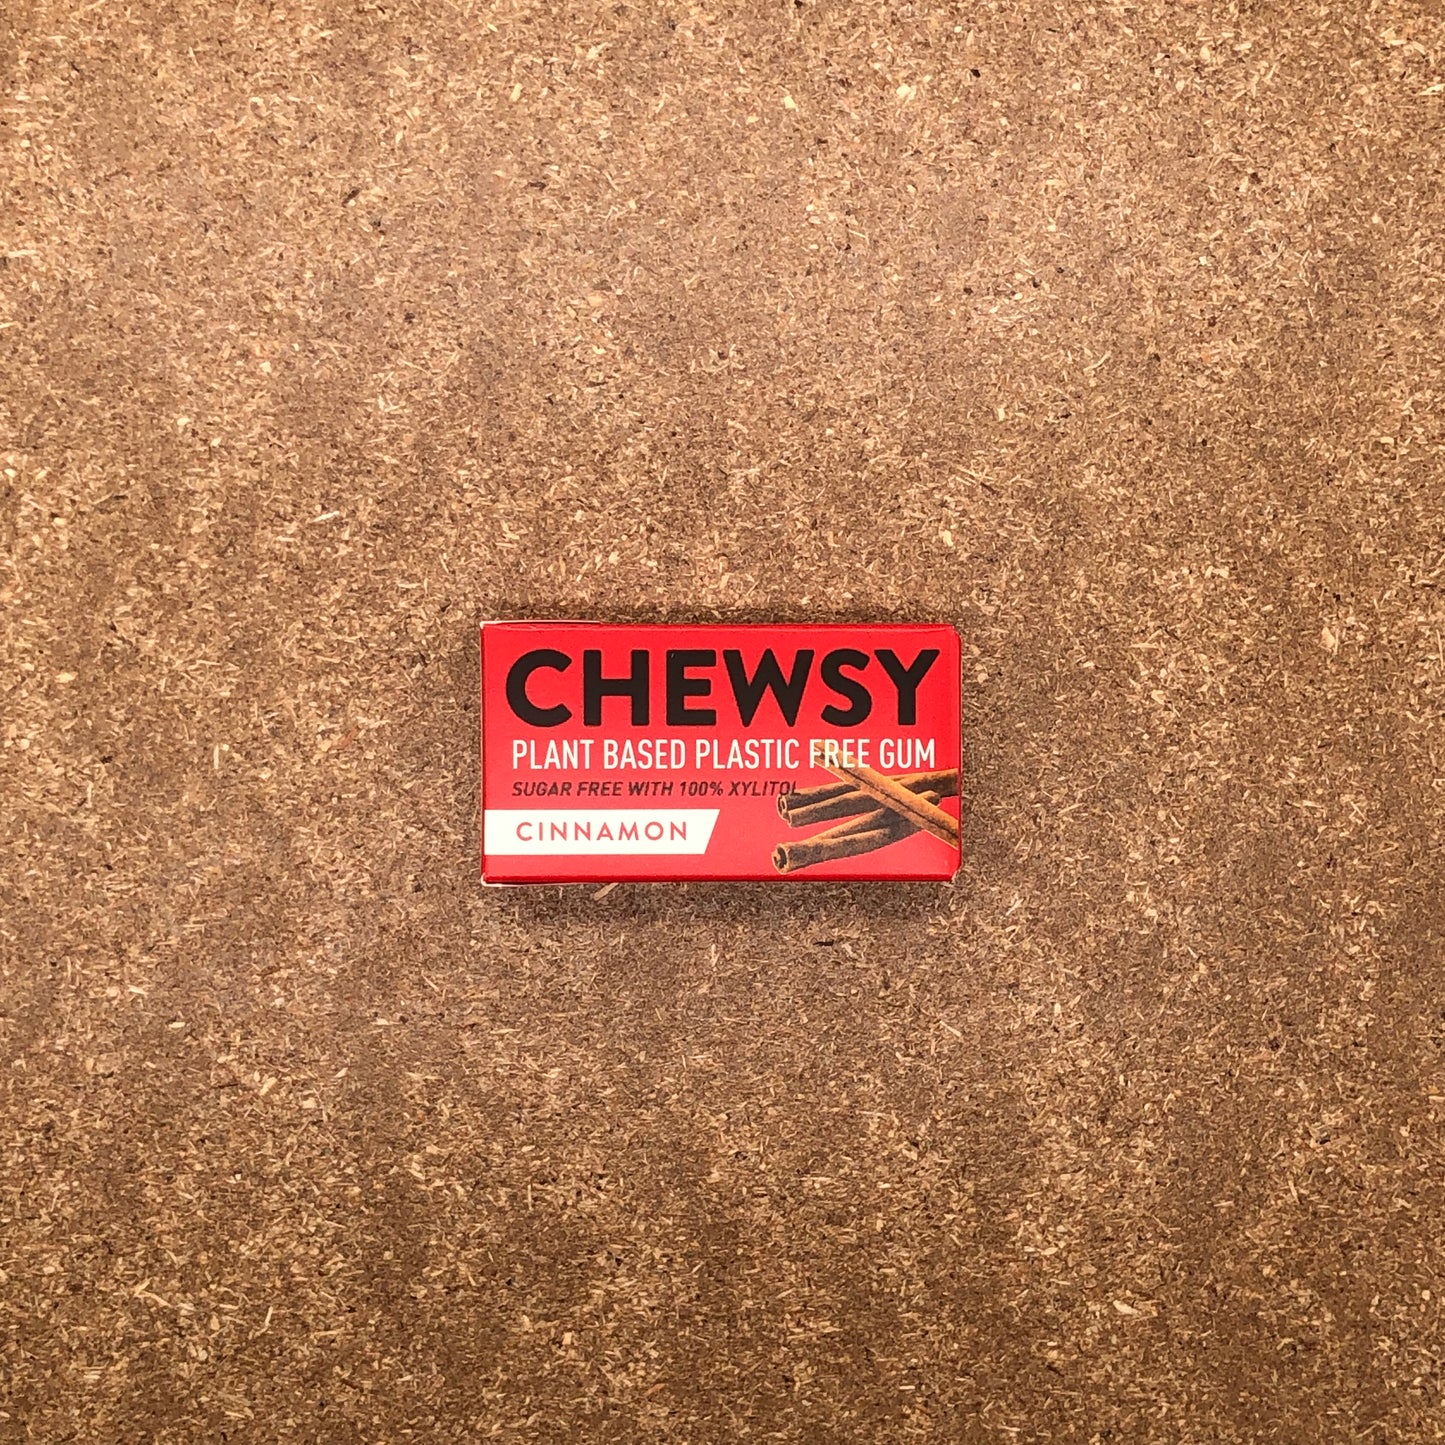 Cinnamon Chewing Gum